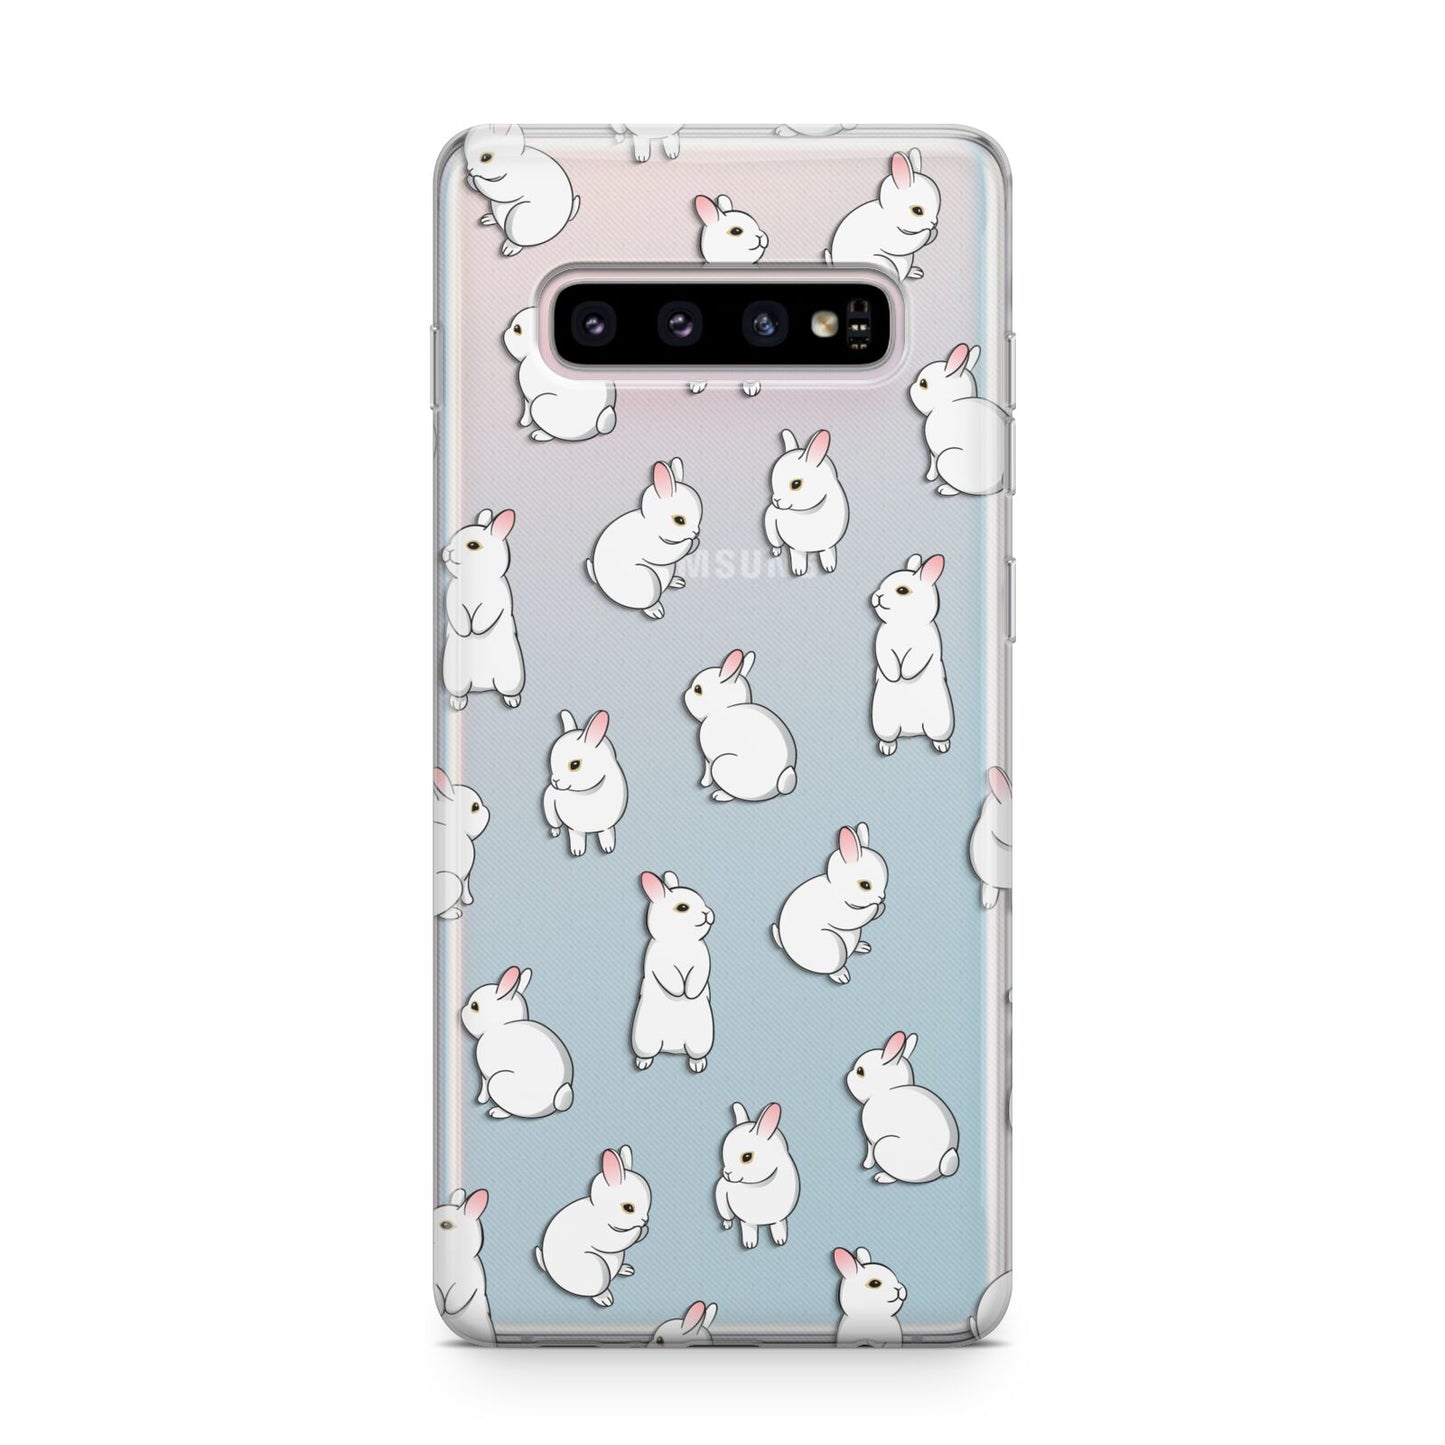 Bunny Rabbit Samsung Galaxy S10 Plus Case